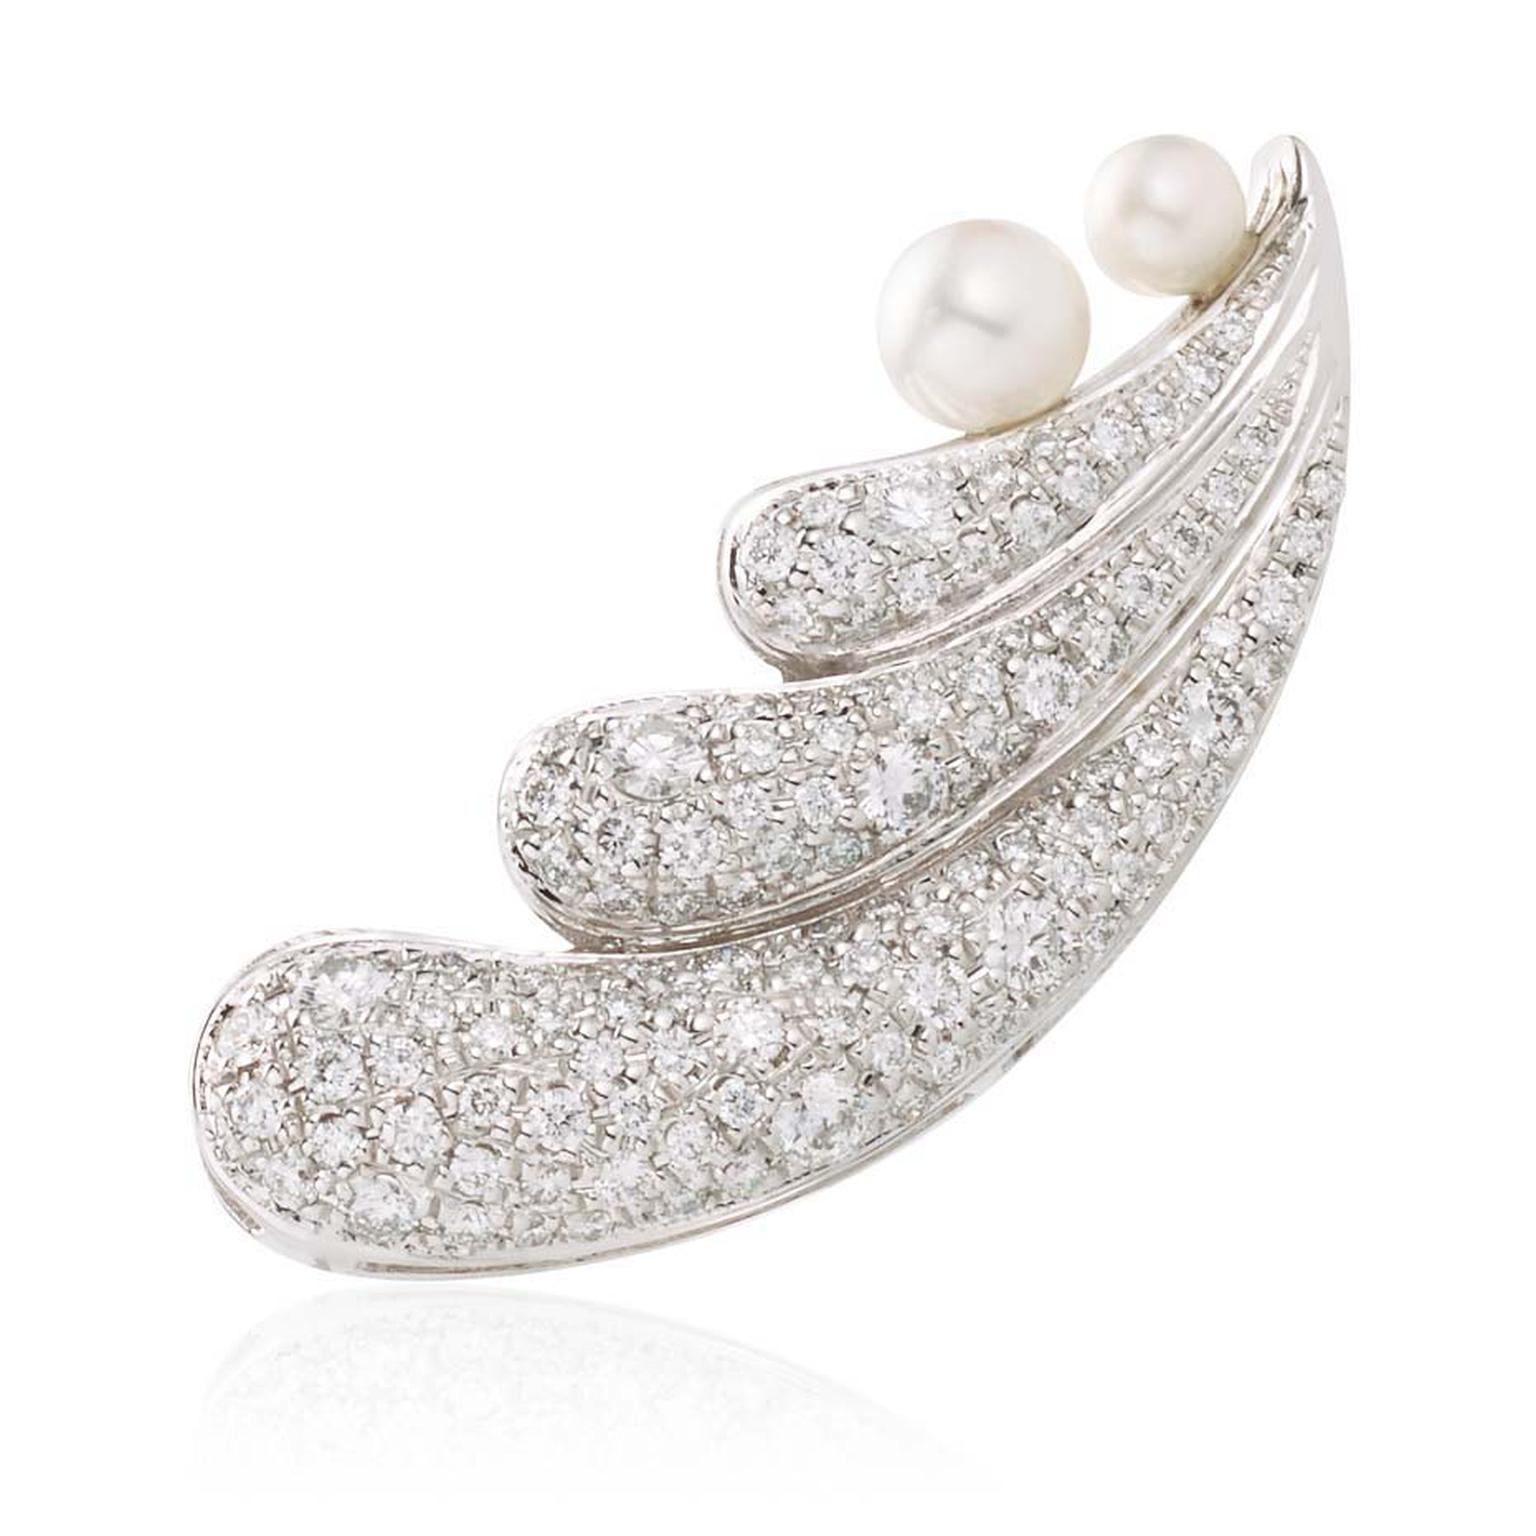 Nicholas Liu Cosmos earrings with diamonds and pearls.